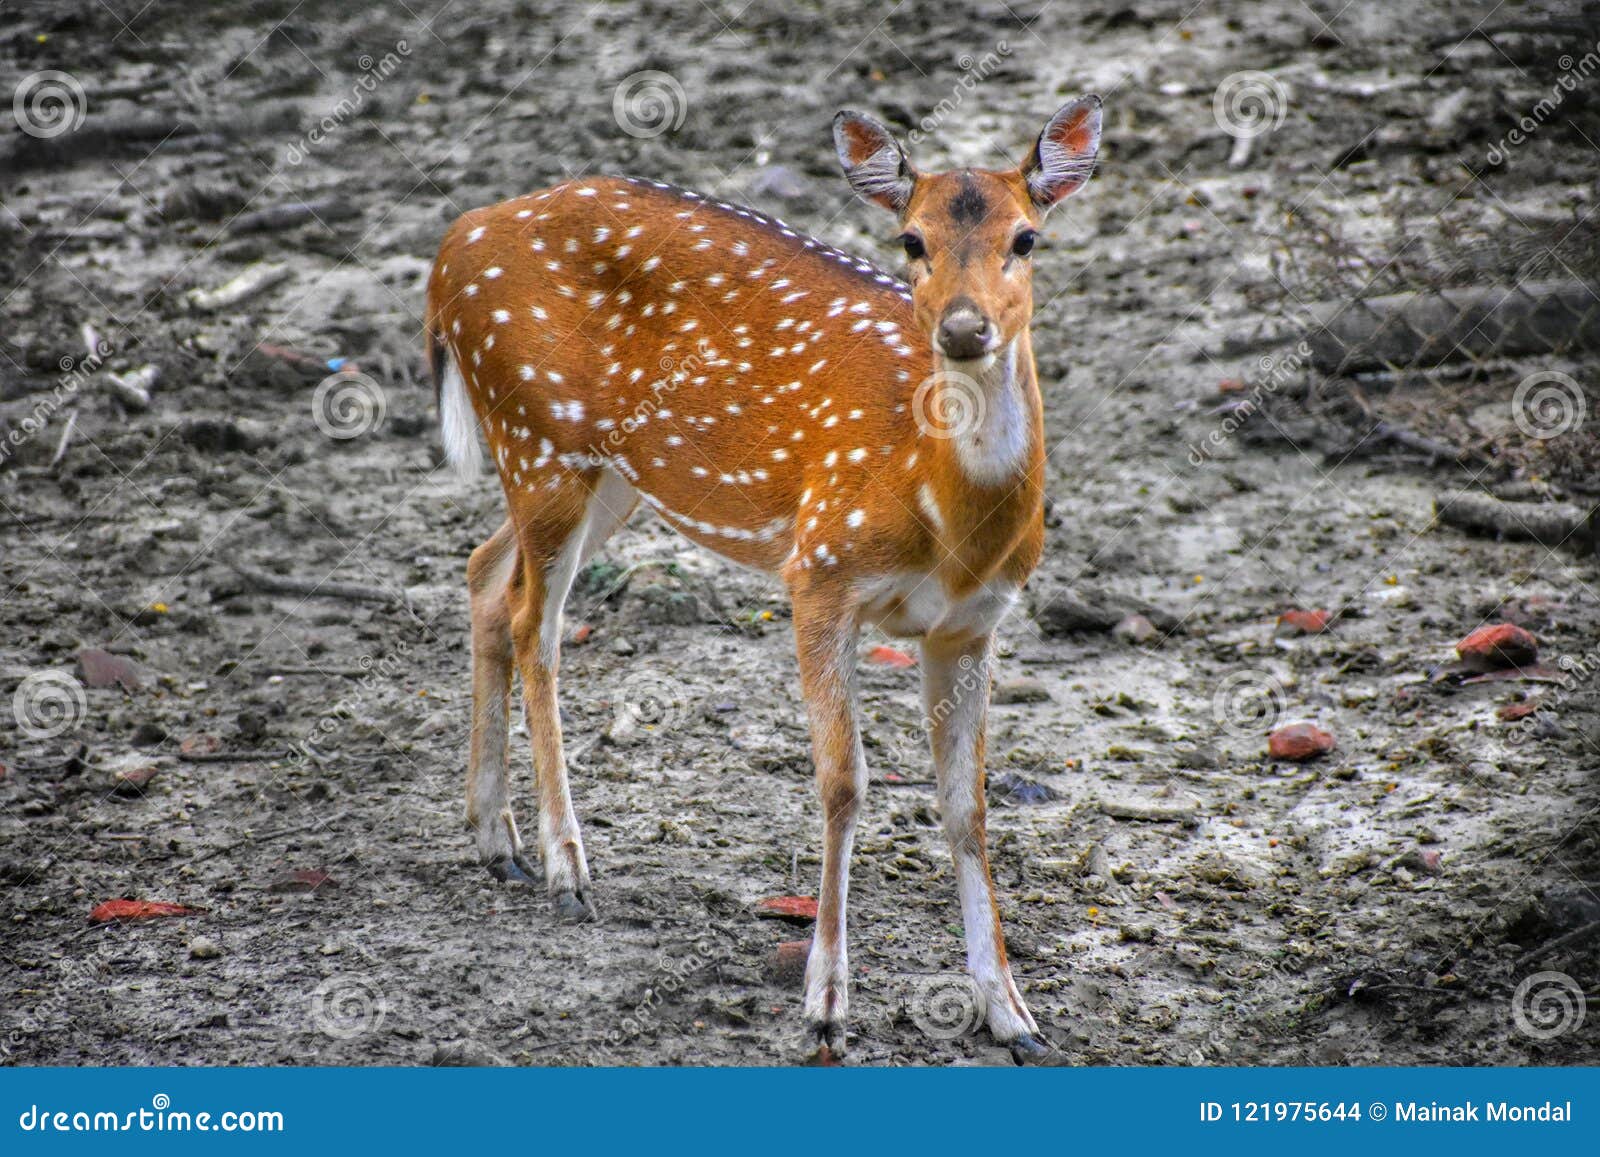 Baby Deer Wallpaper Stock Photo Image Of Cutedeer Animal 121975644